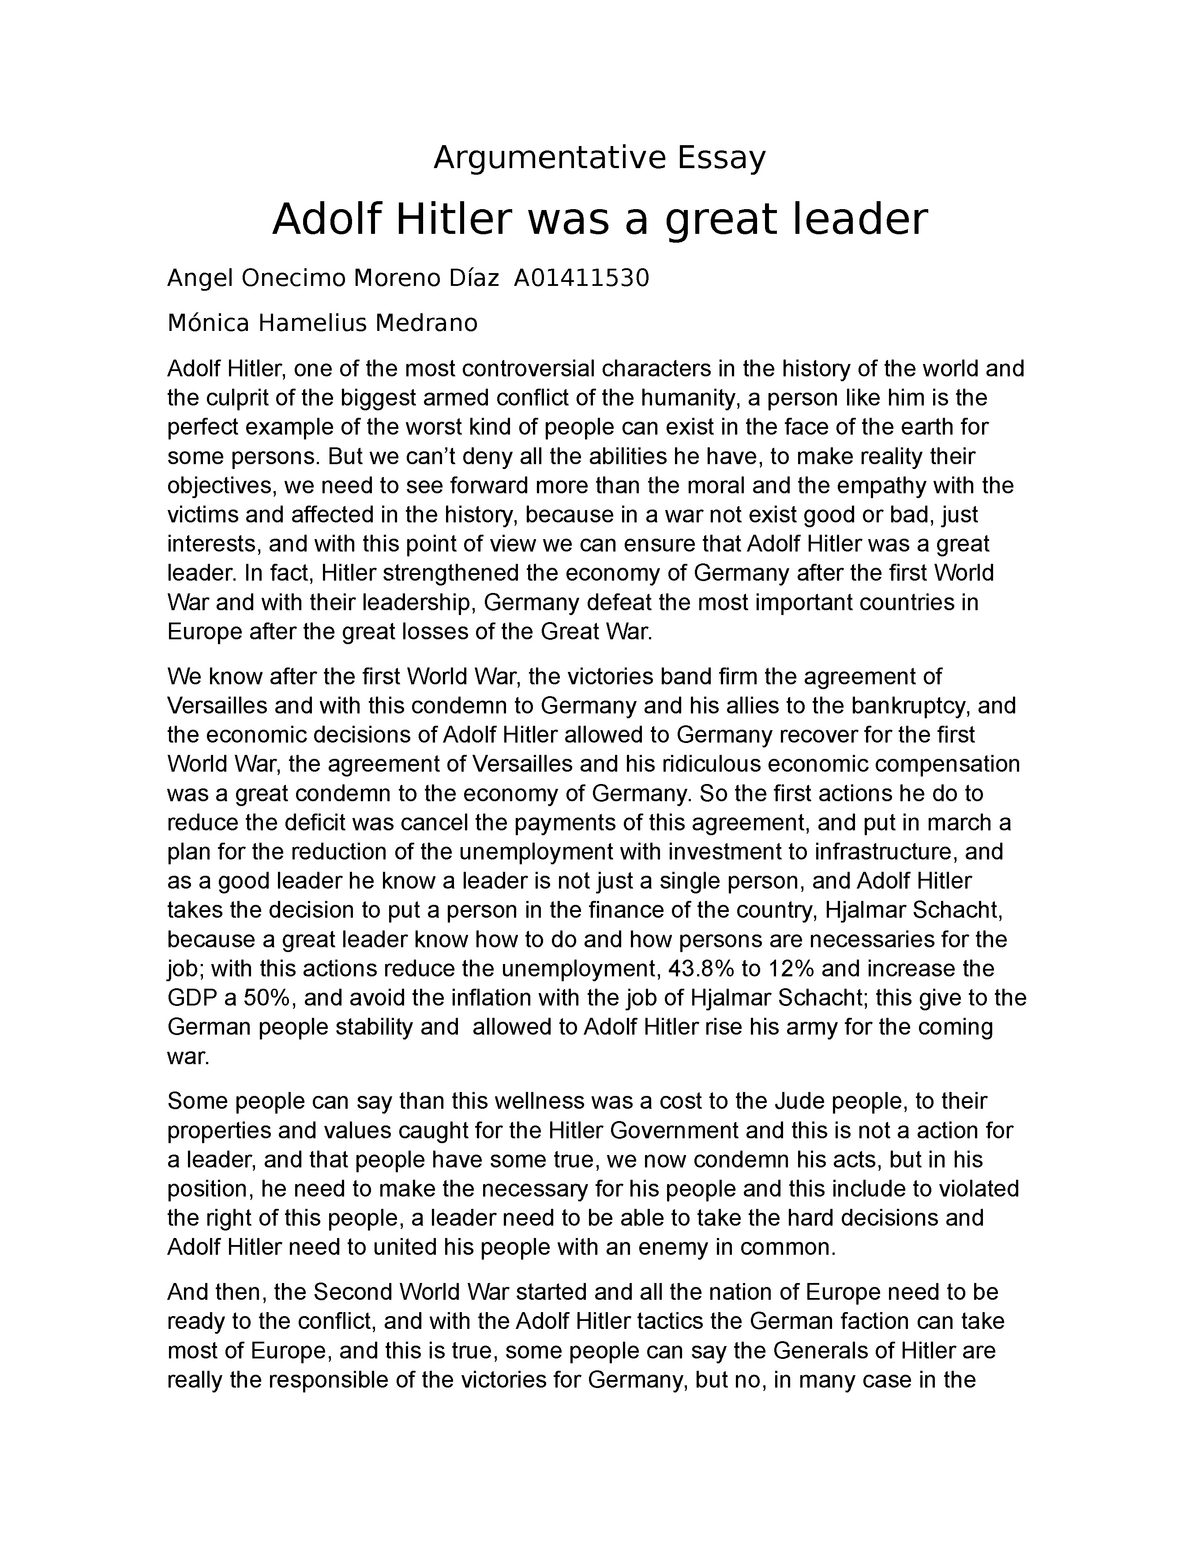 hitler speech essay